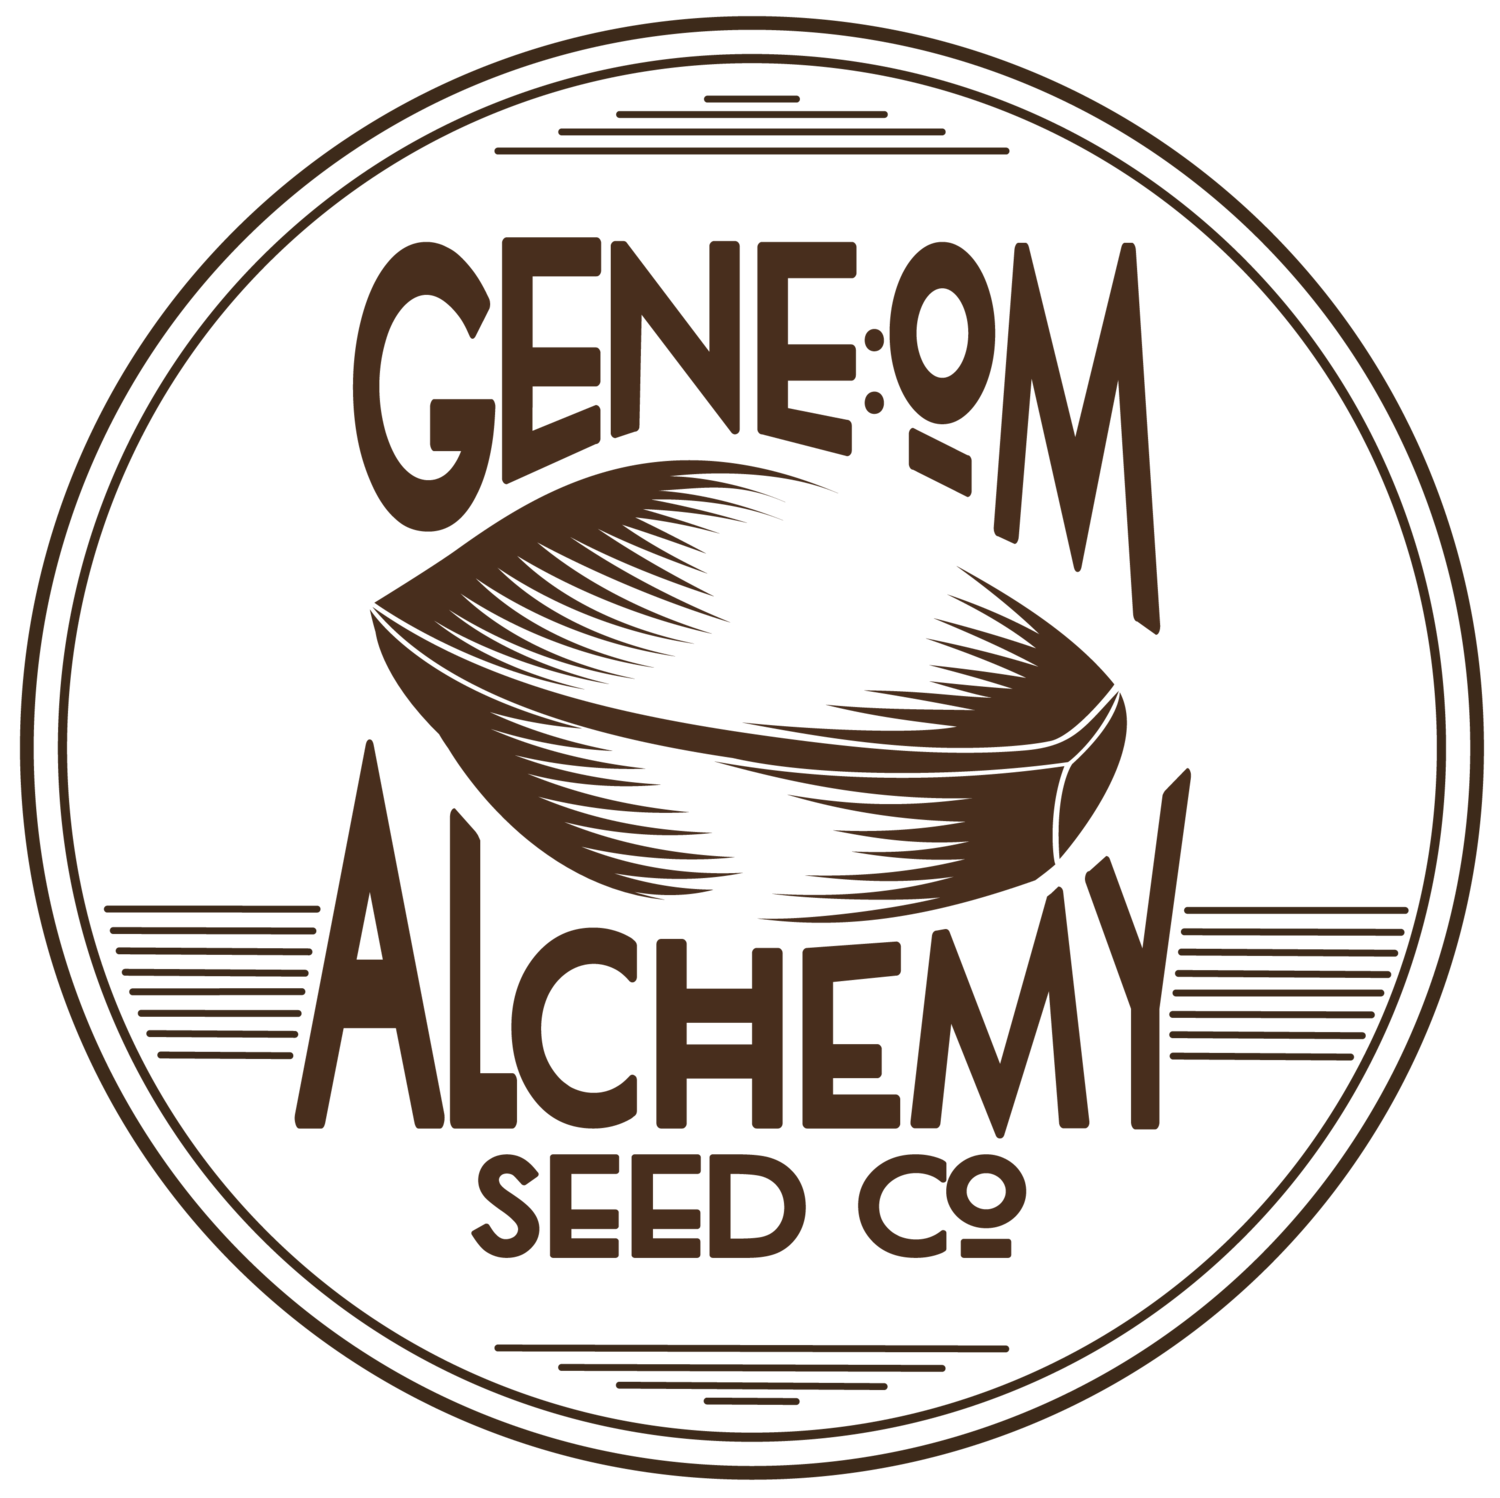 Gene:OM Alchemy Seed Co